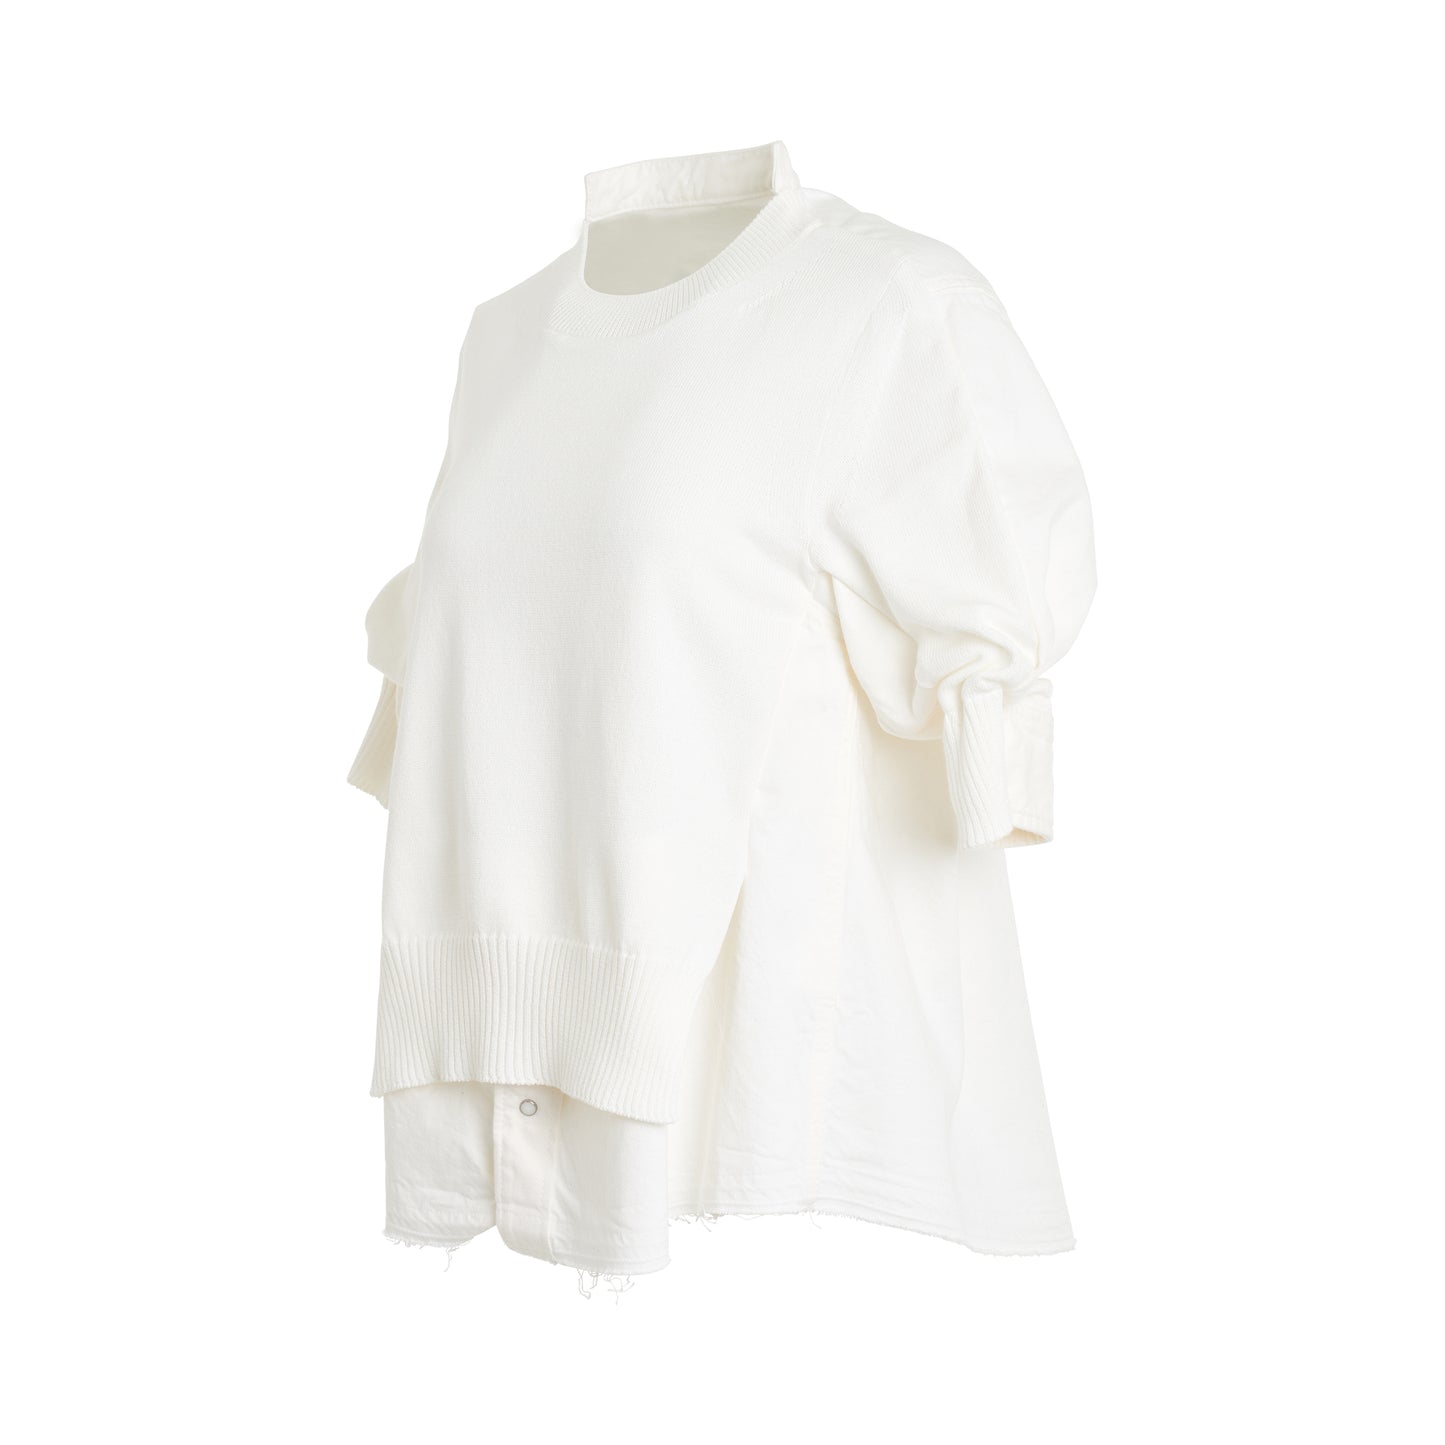 Denim x Knit Sweater in Off White